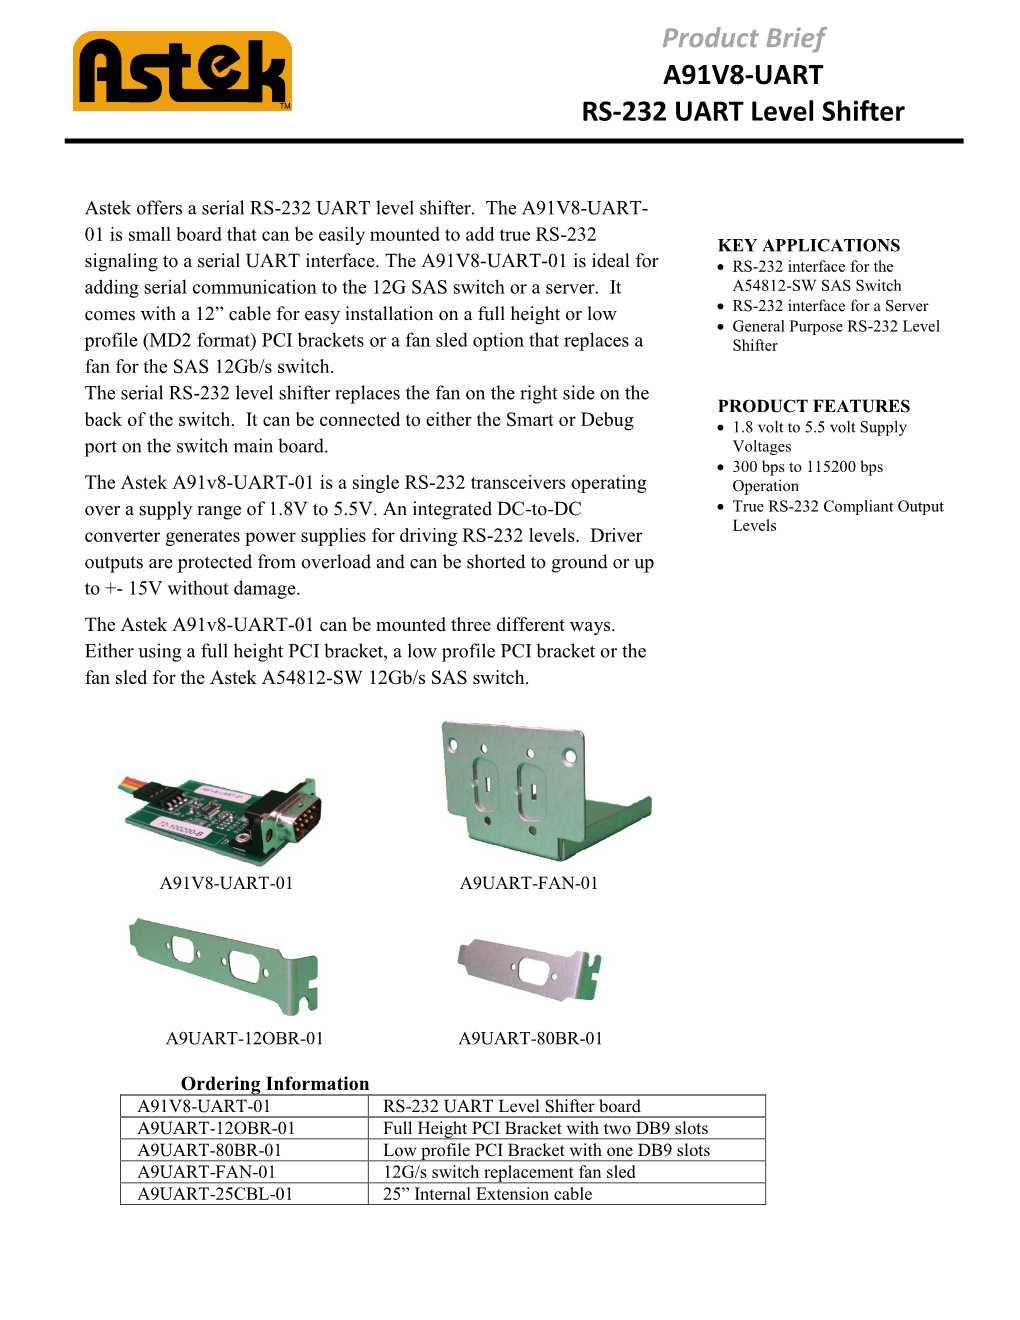 Product Brief A91V8-UART RS-232 UART Level Shifter